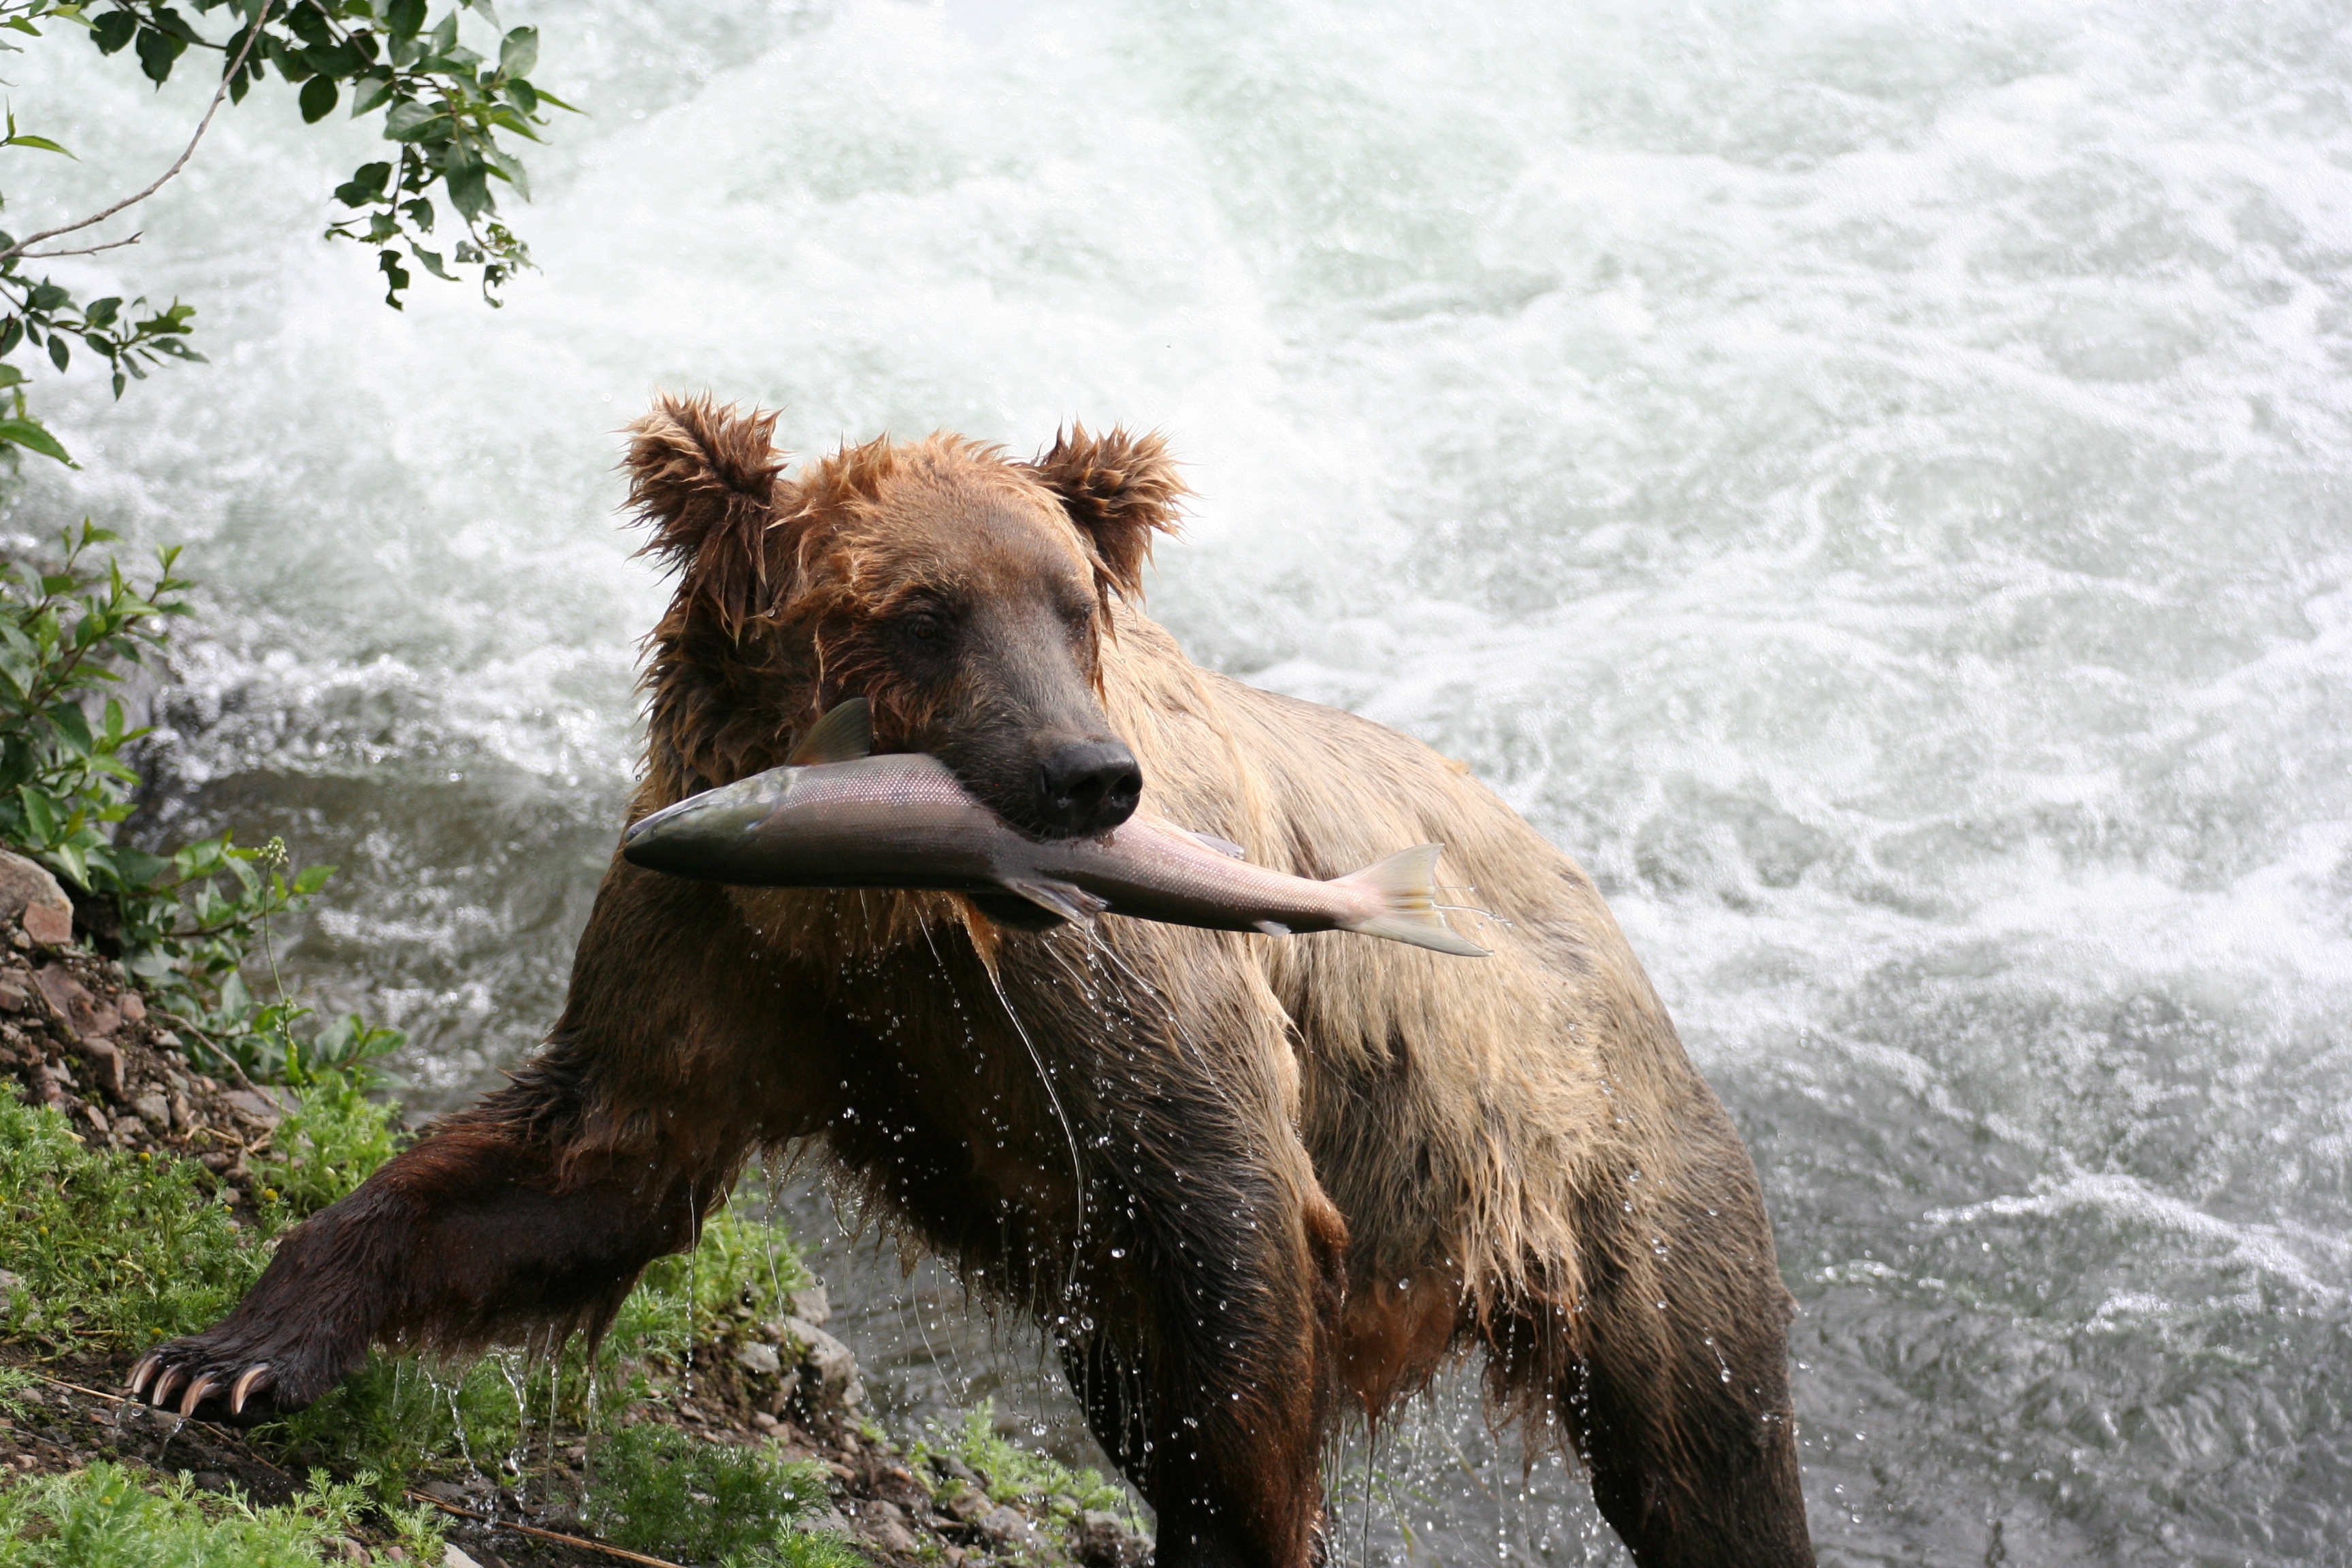 brown bear with salmon